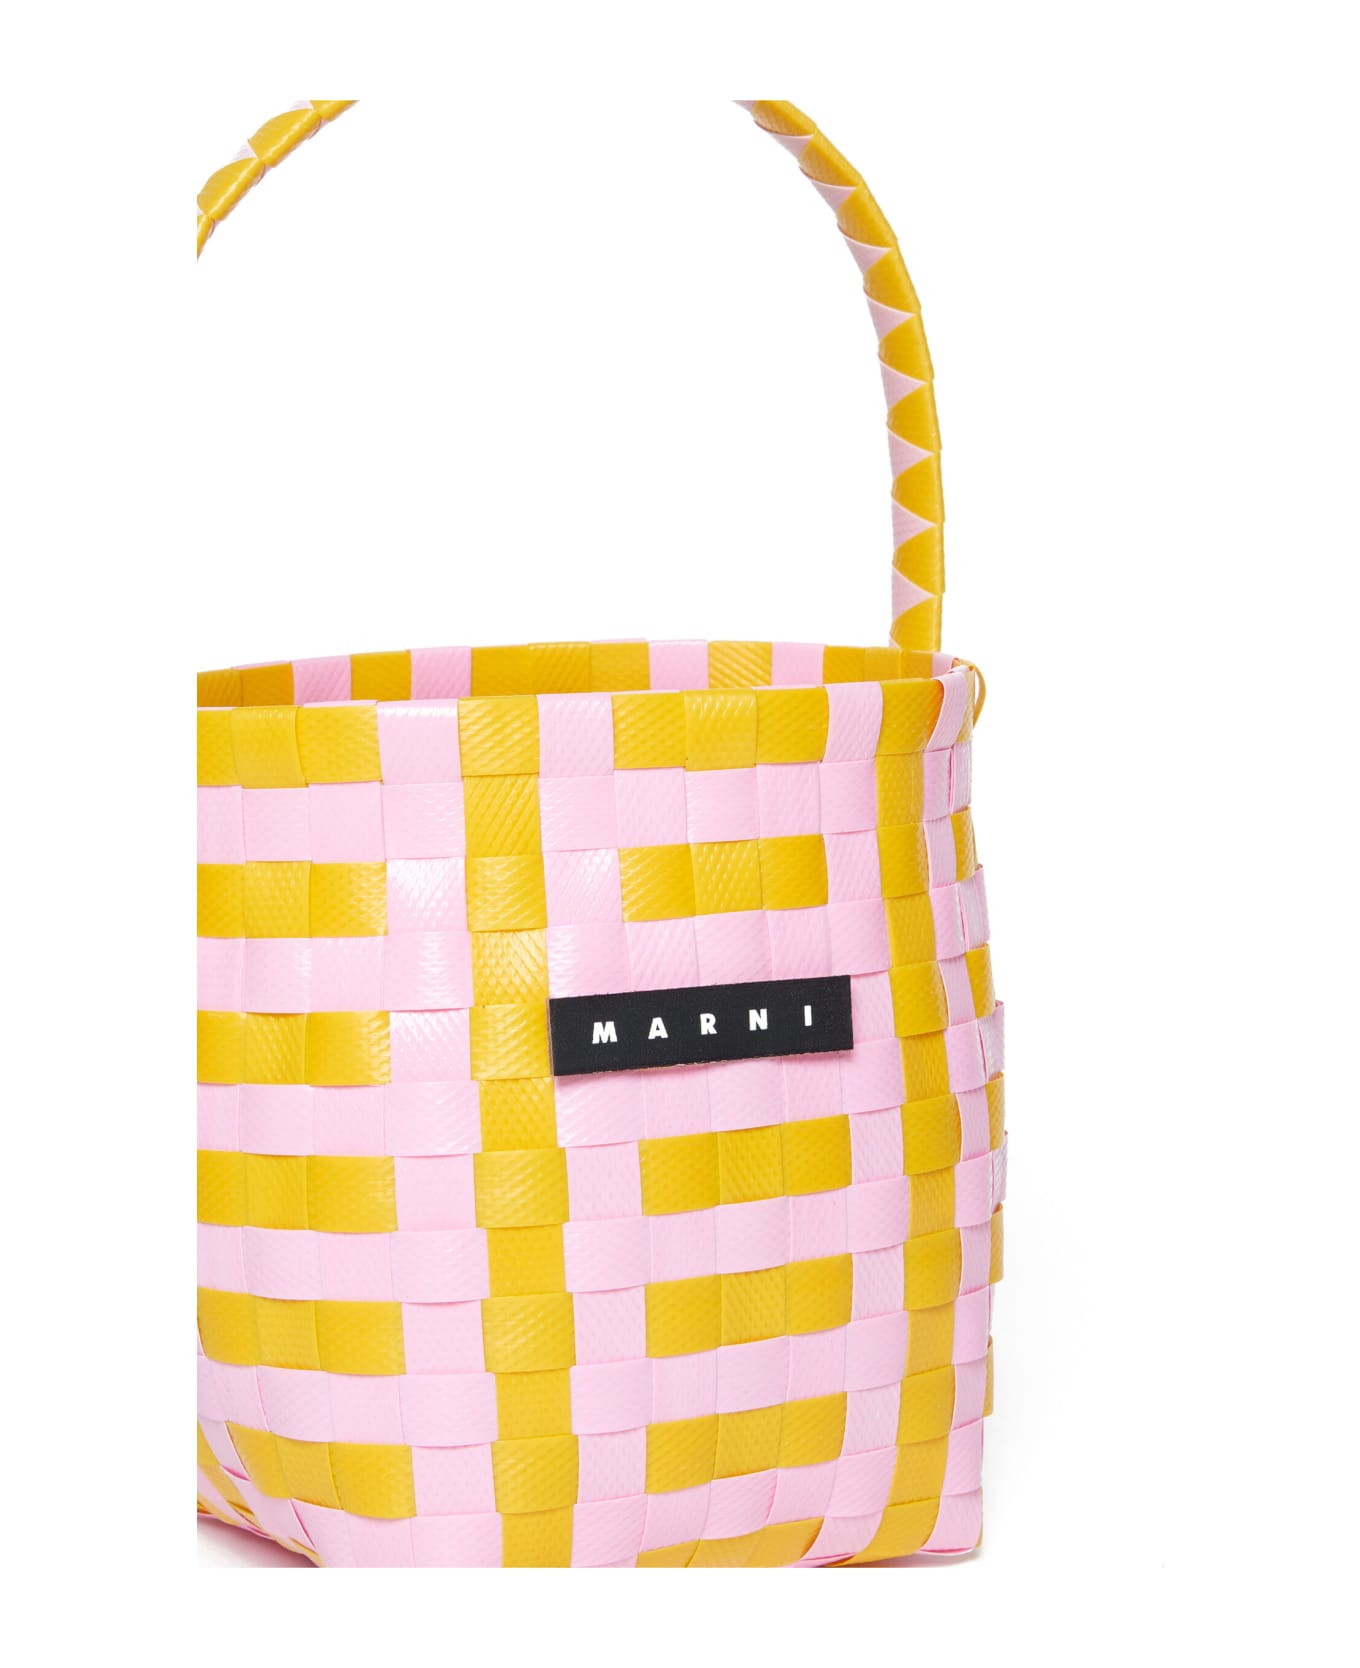 Marni Mw62f-pod Kid Bag Superbreak Bags Marni Lemon Yellow Woven Pod Bag With Single Handle And Applied Logo - Lemon zest yellow